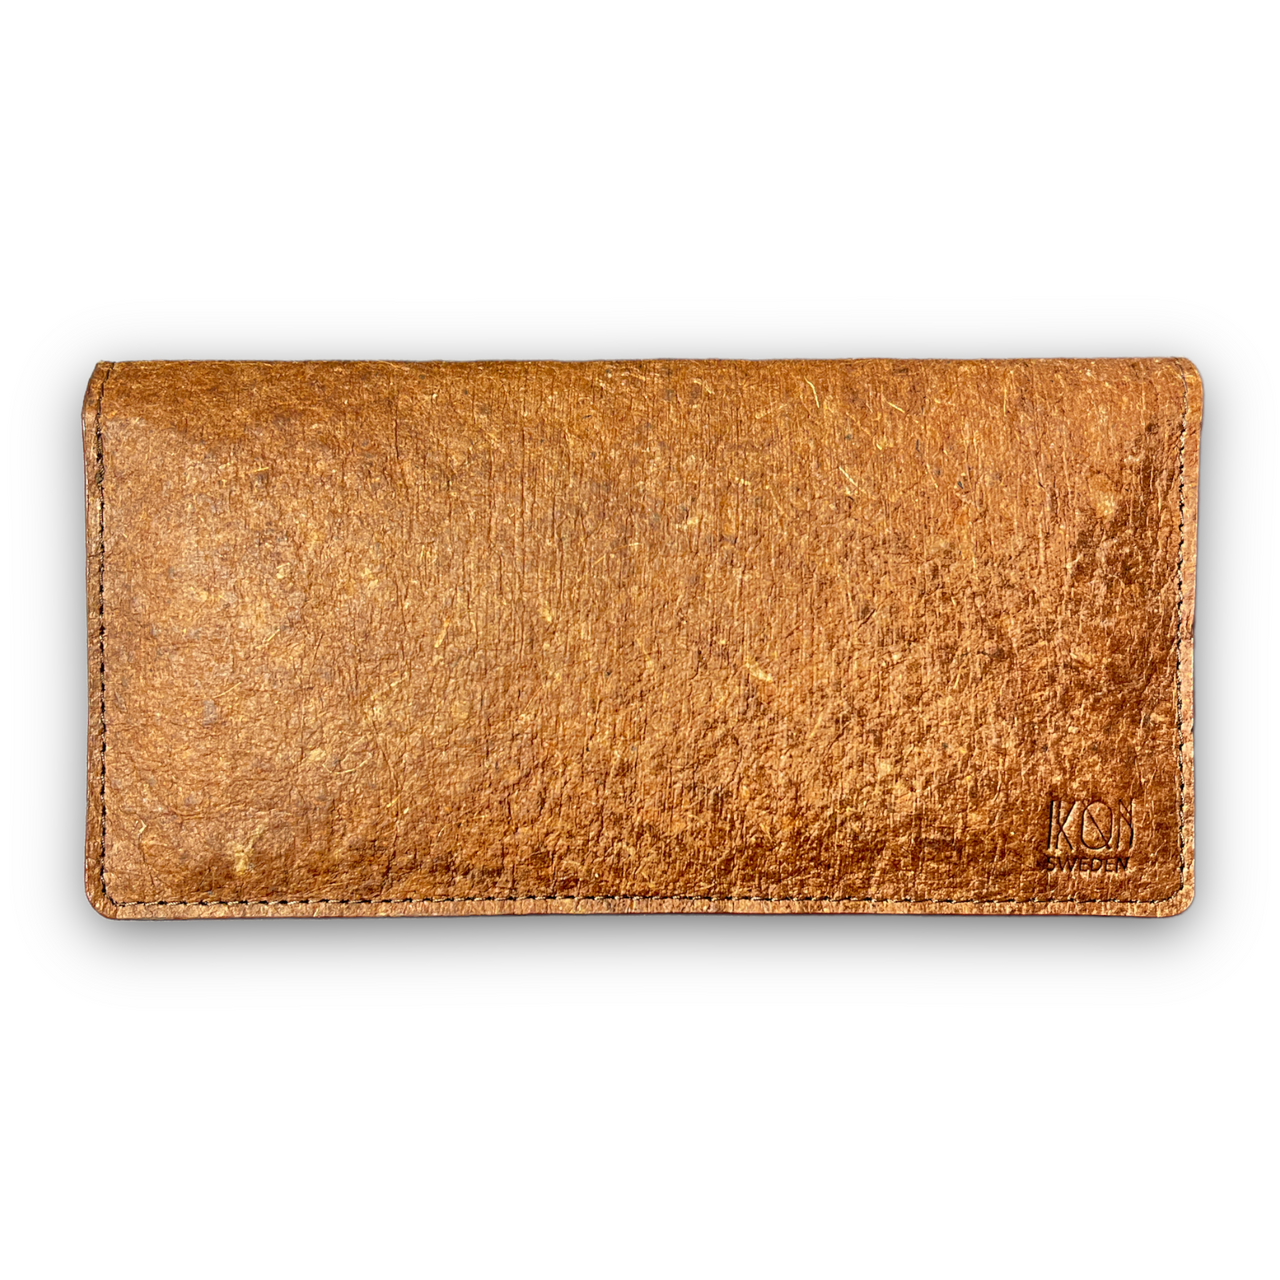 Coconut Leather Slim Wallet for Women - Cutch Brown